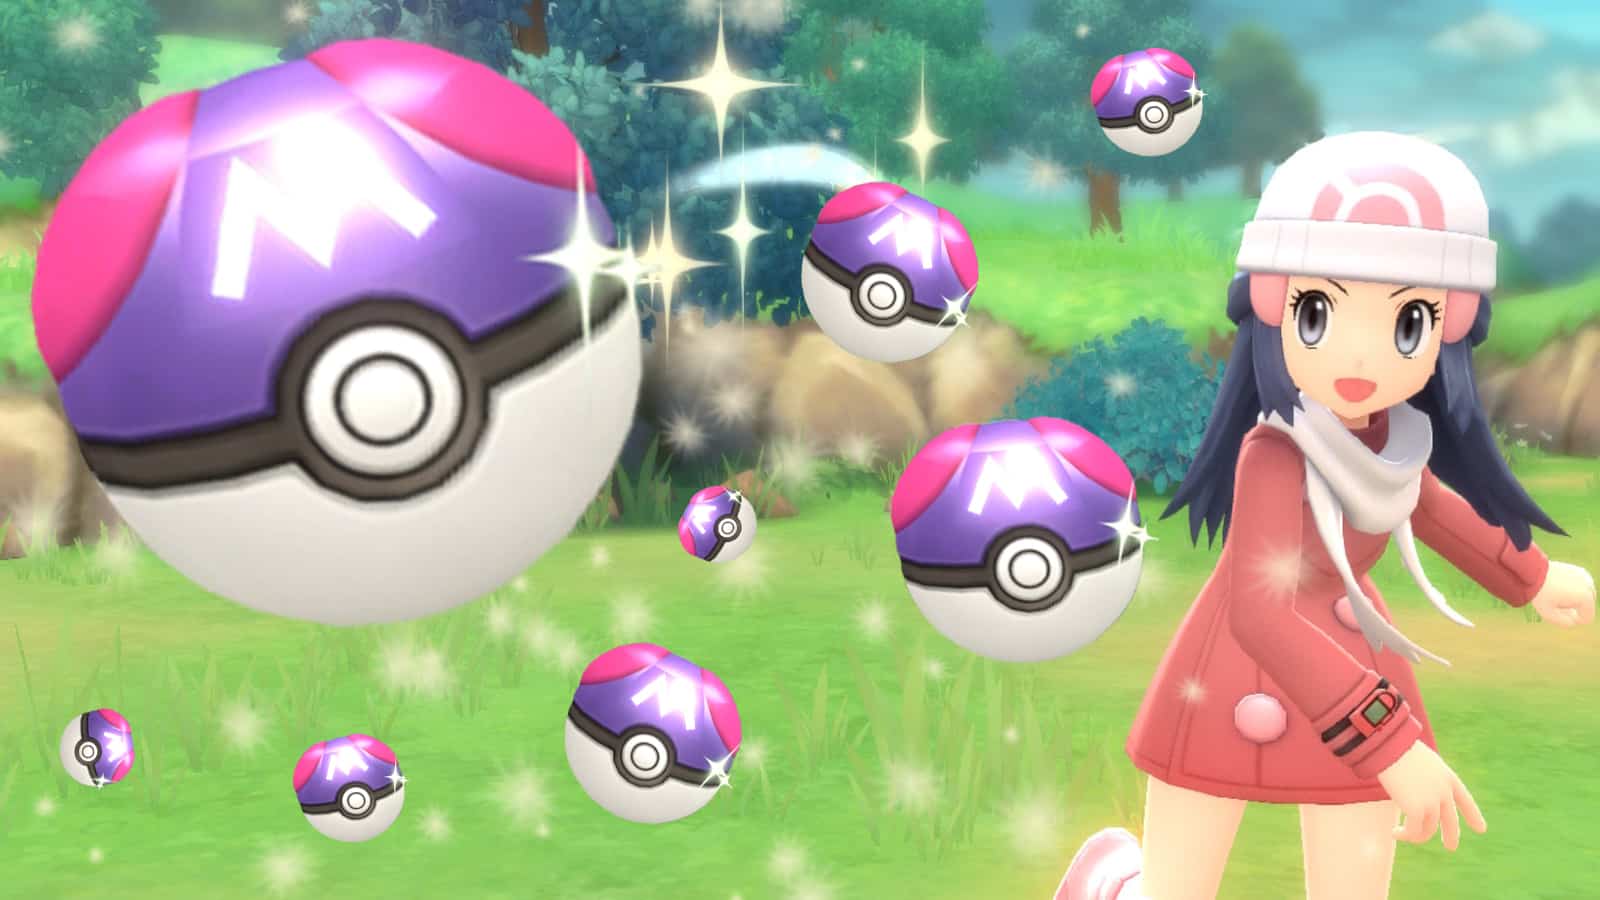 Pokémon Brilliant Diamond Shining Pearl Version Exclusive Codes